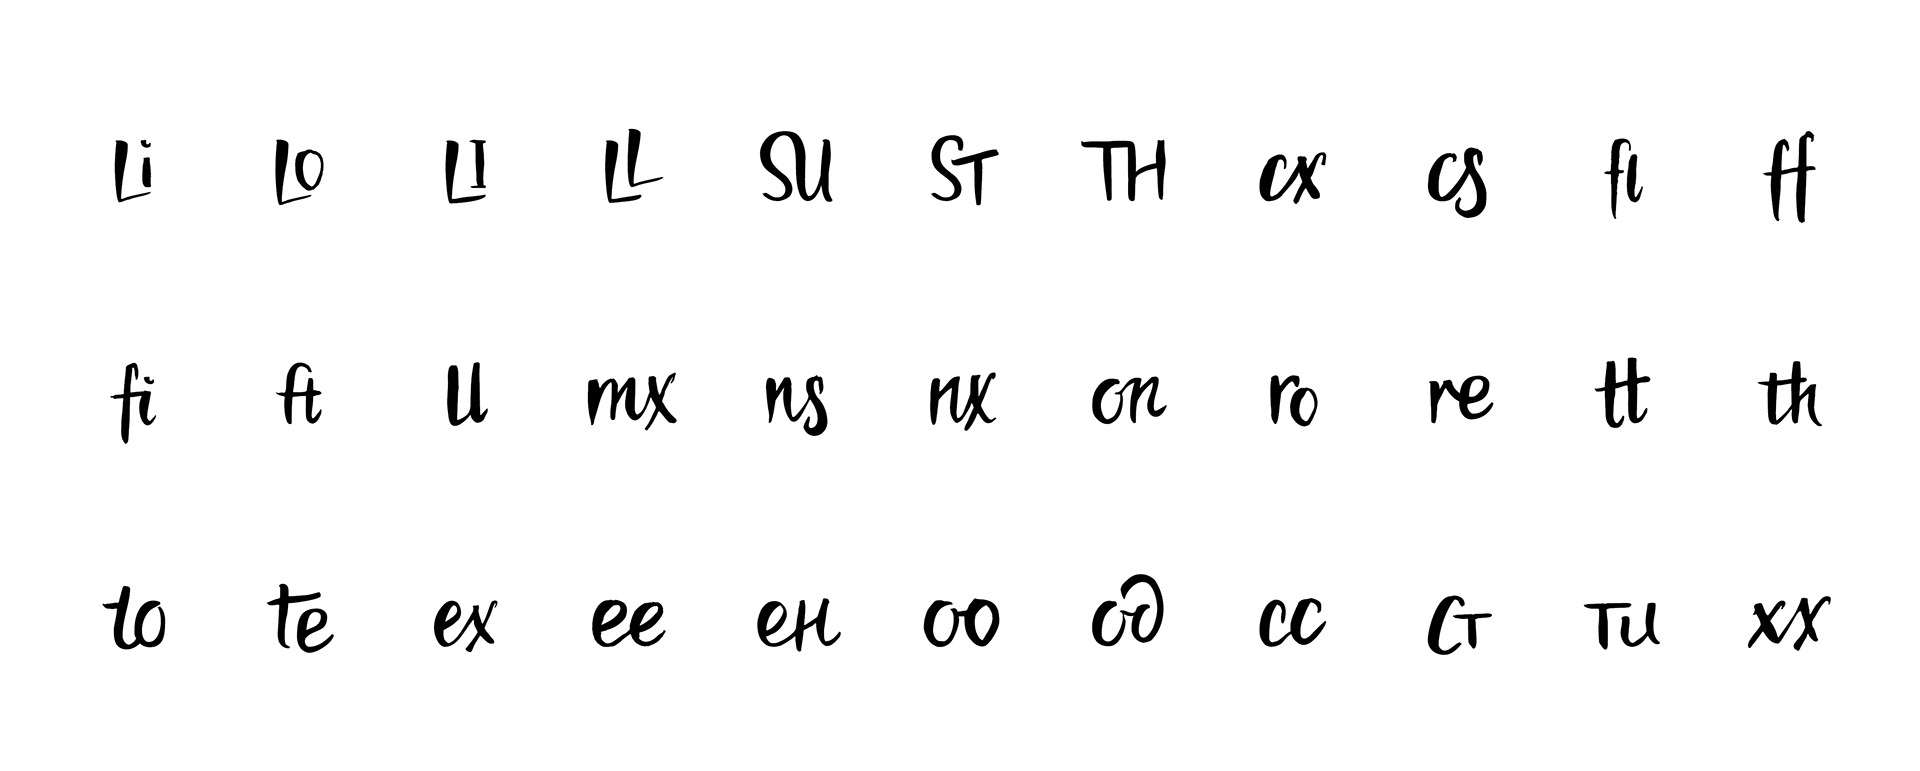 Example font kraM #5